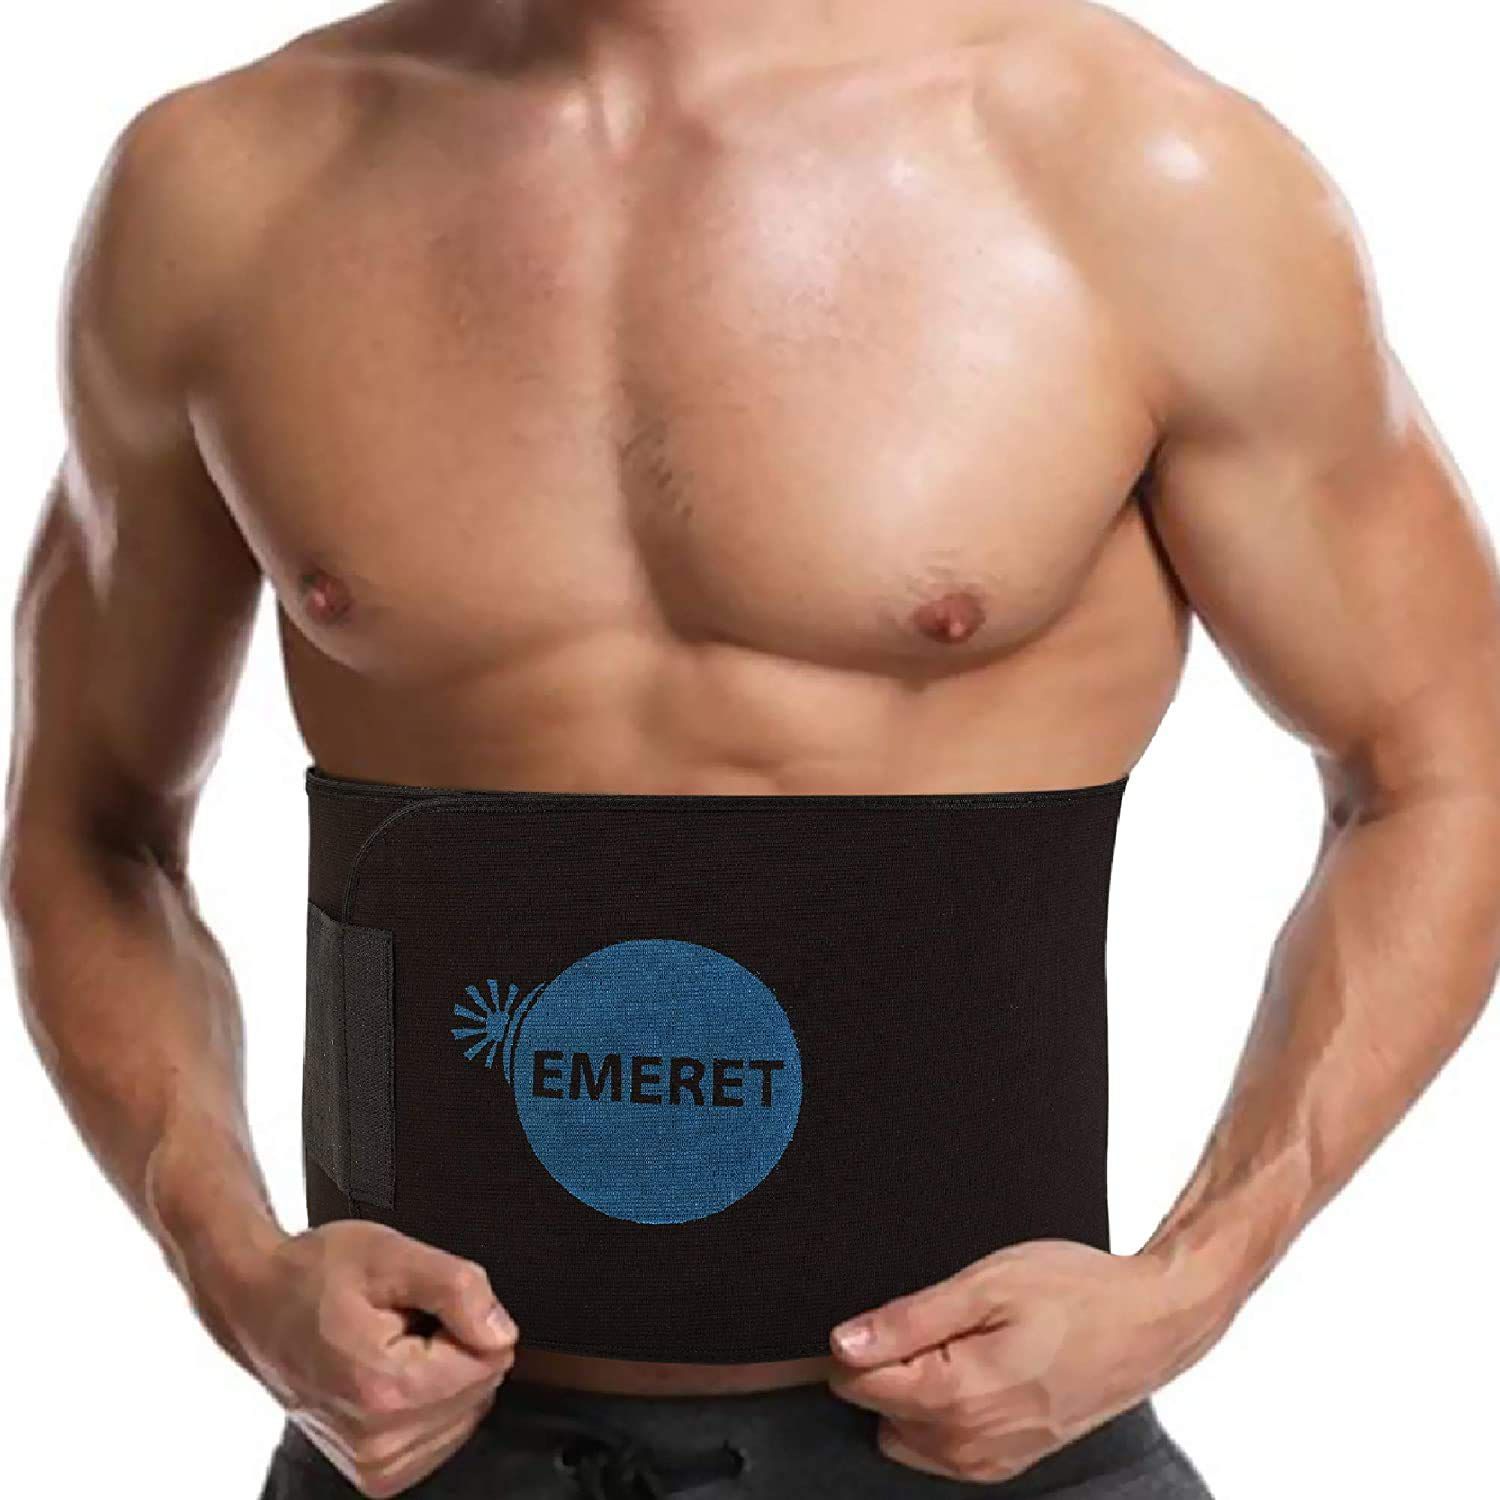     			Emeret Premium Waist Trimmer Belt for Men & Women Swea.t Sauna for Faster Water Loss Workout Slimming Body Shaper Sauna Exercise